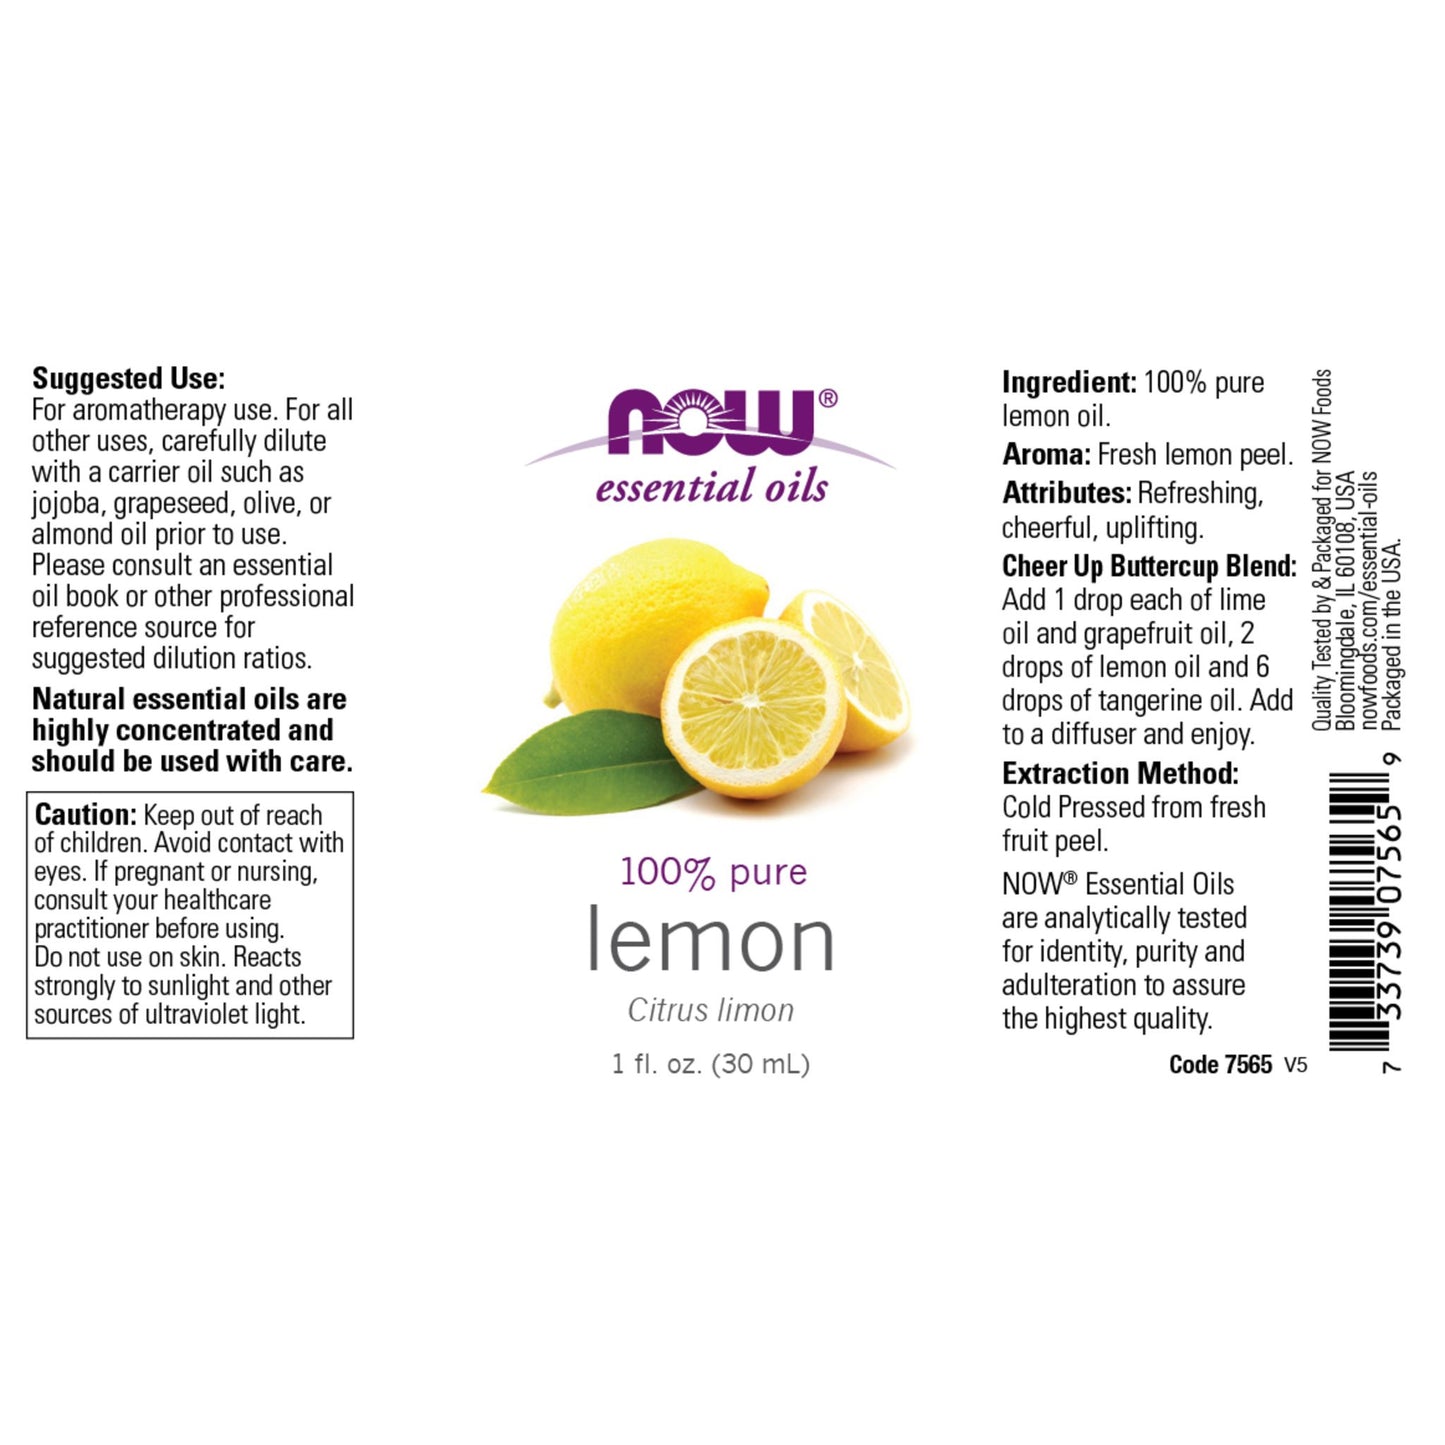 NOW Foods Lemon Essential Oil